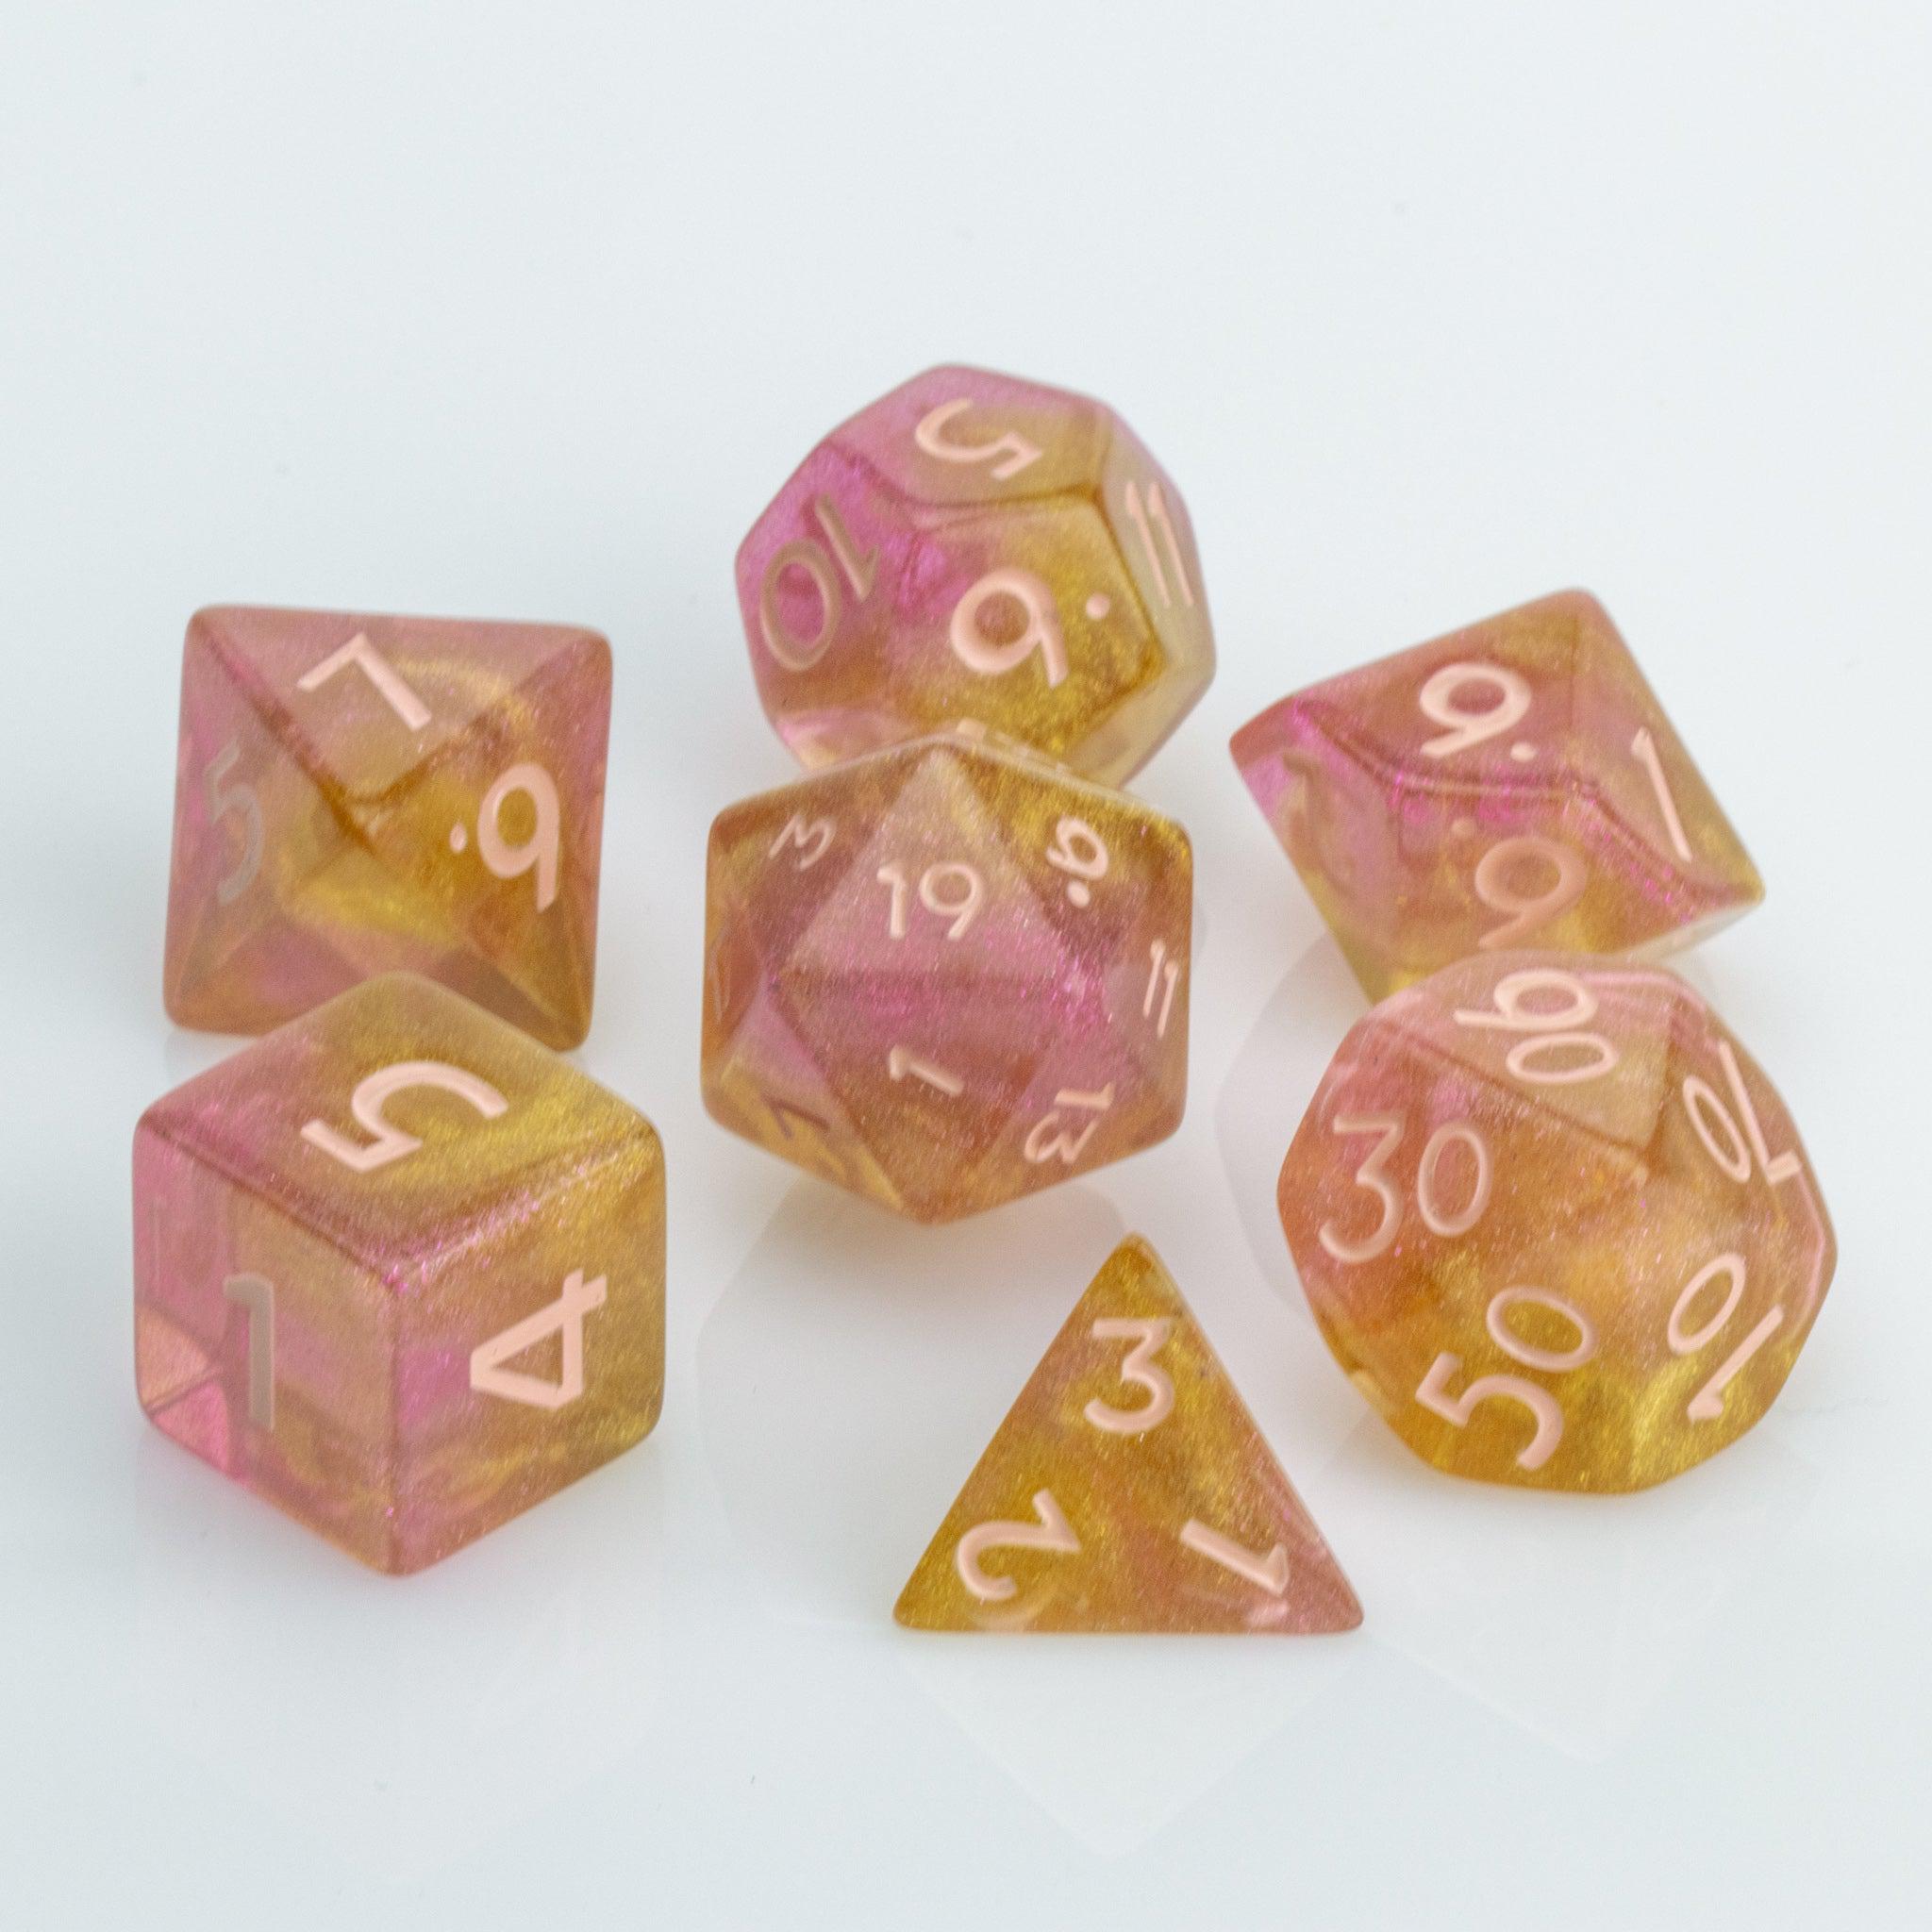 Pamplemousse, pink & orange gold 7 piece RPG dice set on a white background.